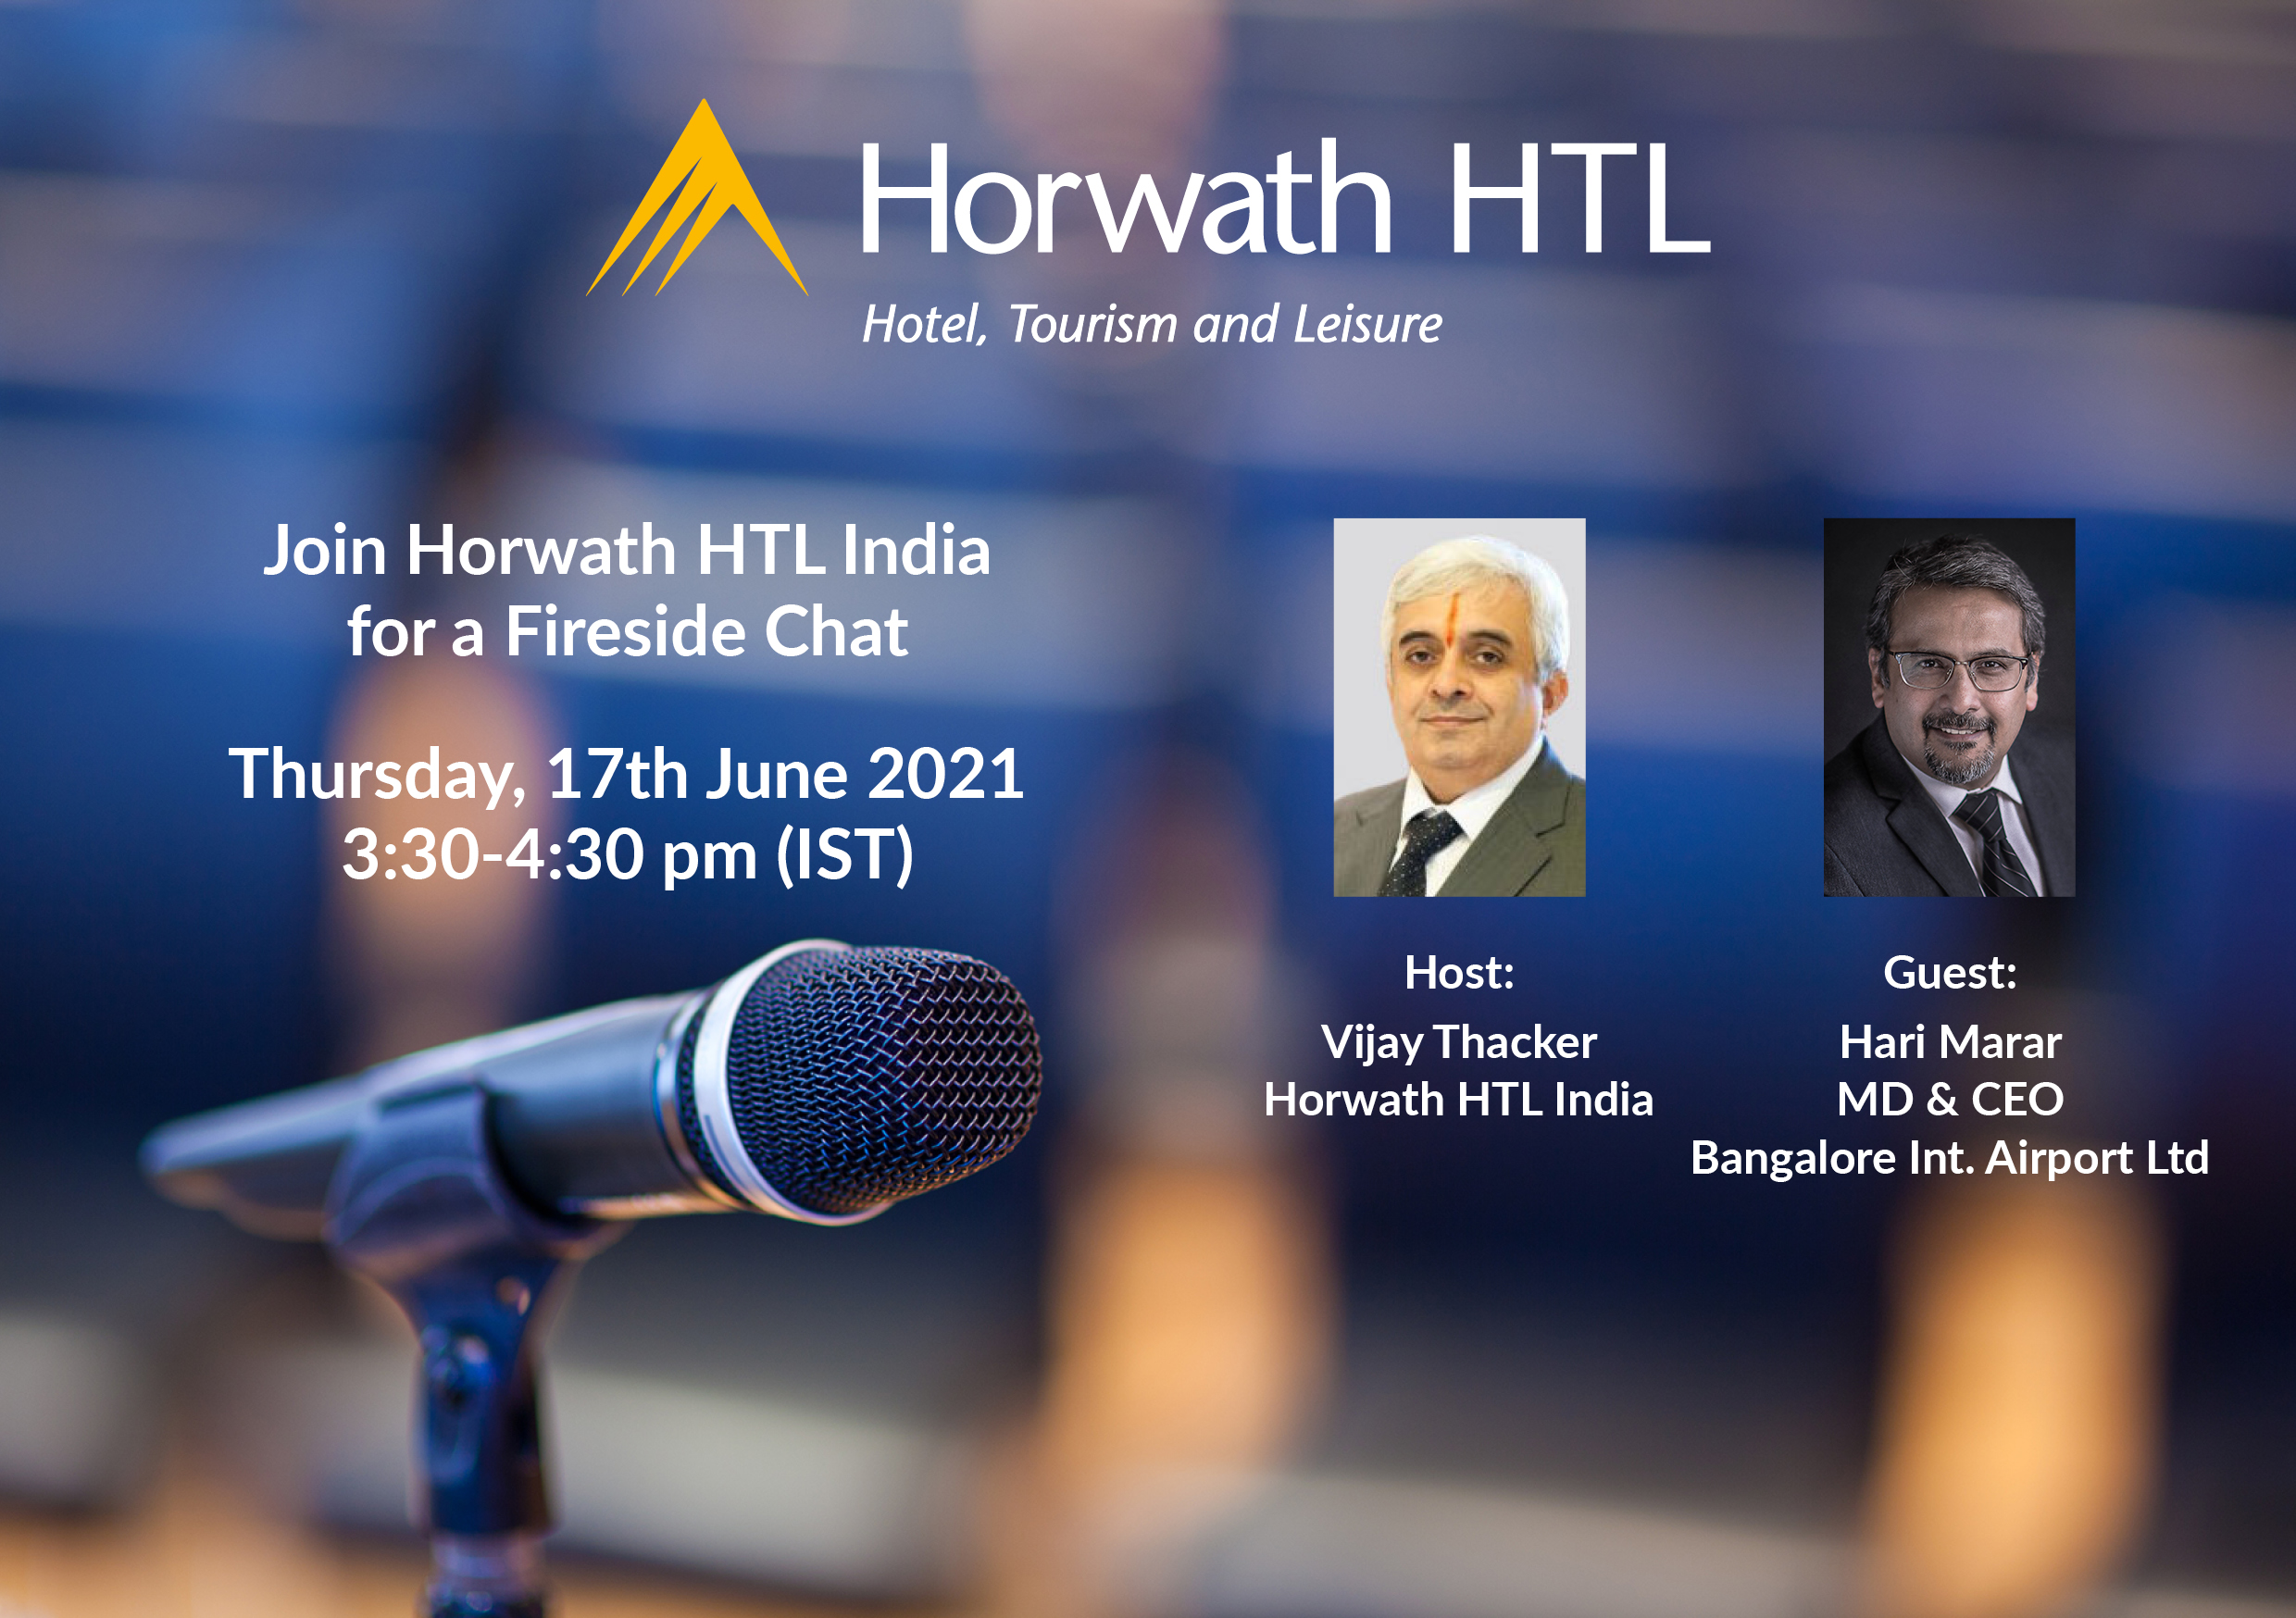 Horwath HTL India: A Fireside Chat with Hari Marar